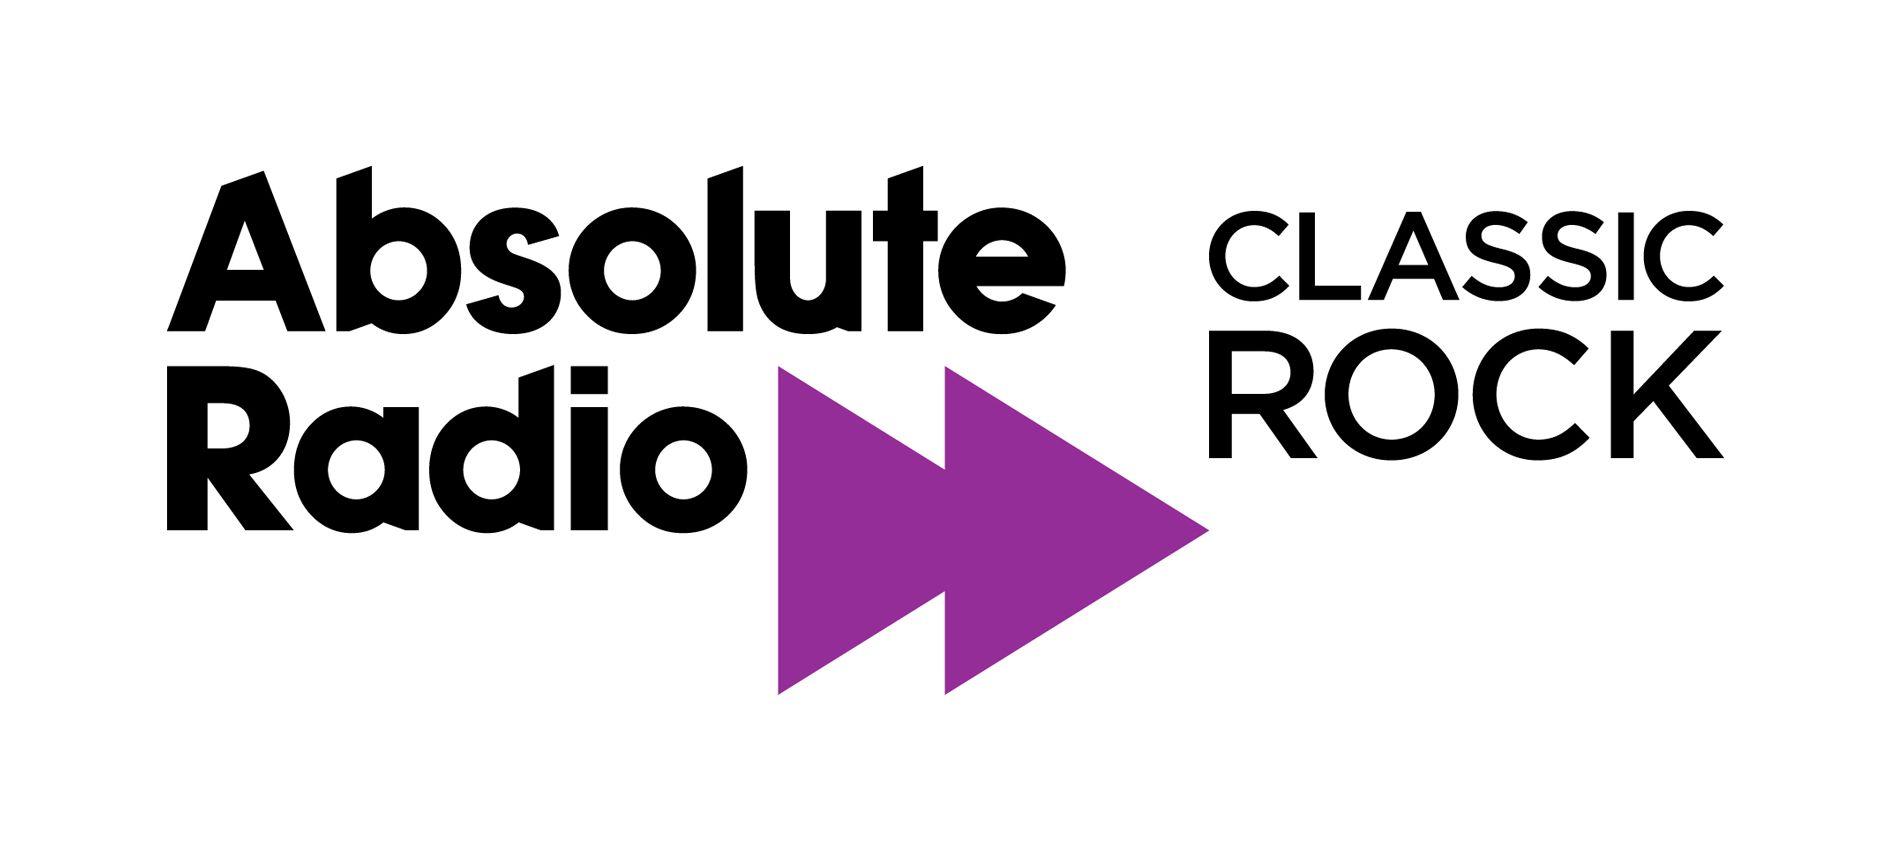 60s Radio Logo - Absolute Radio logo